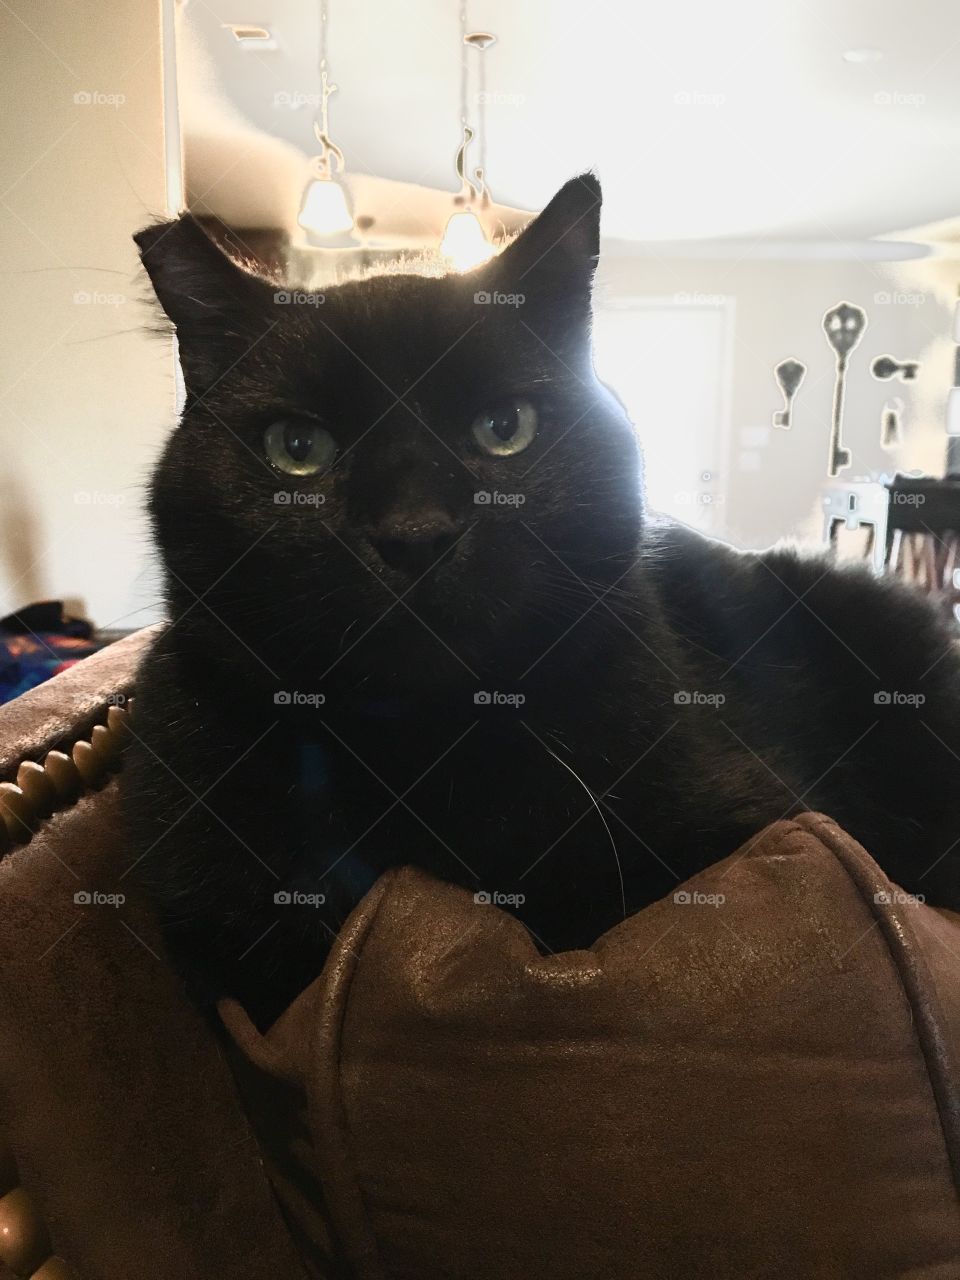 Our fat black cat named Thunder. 